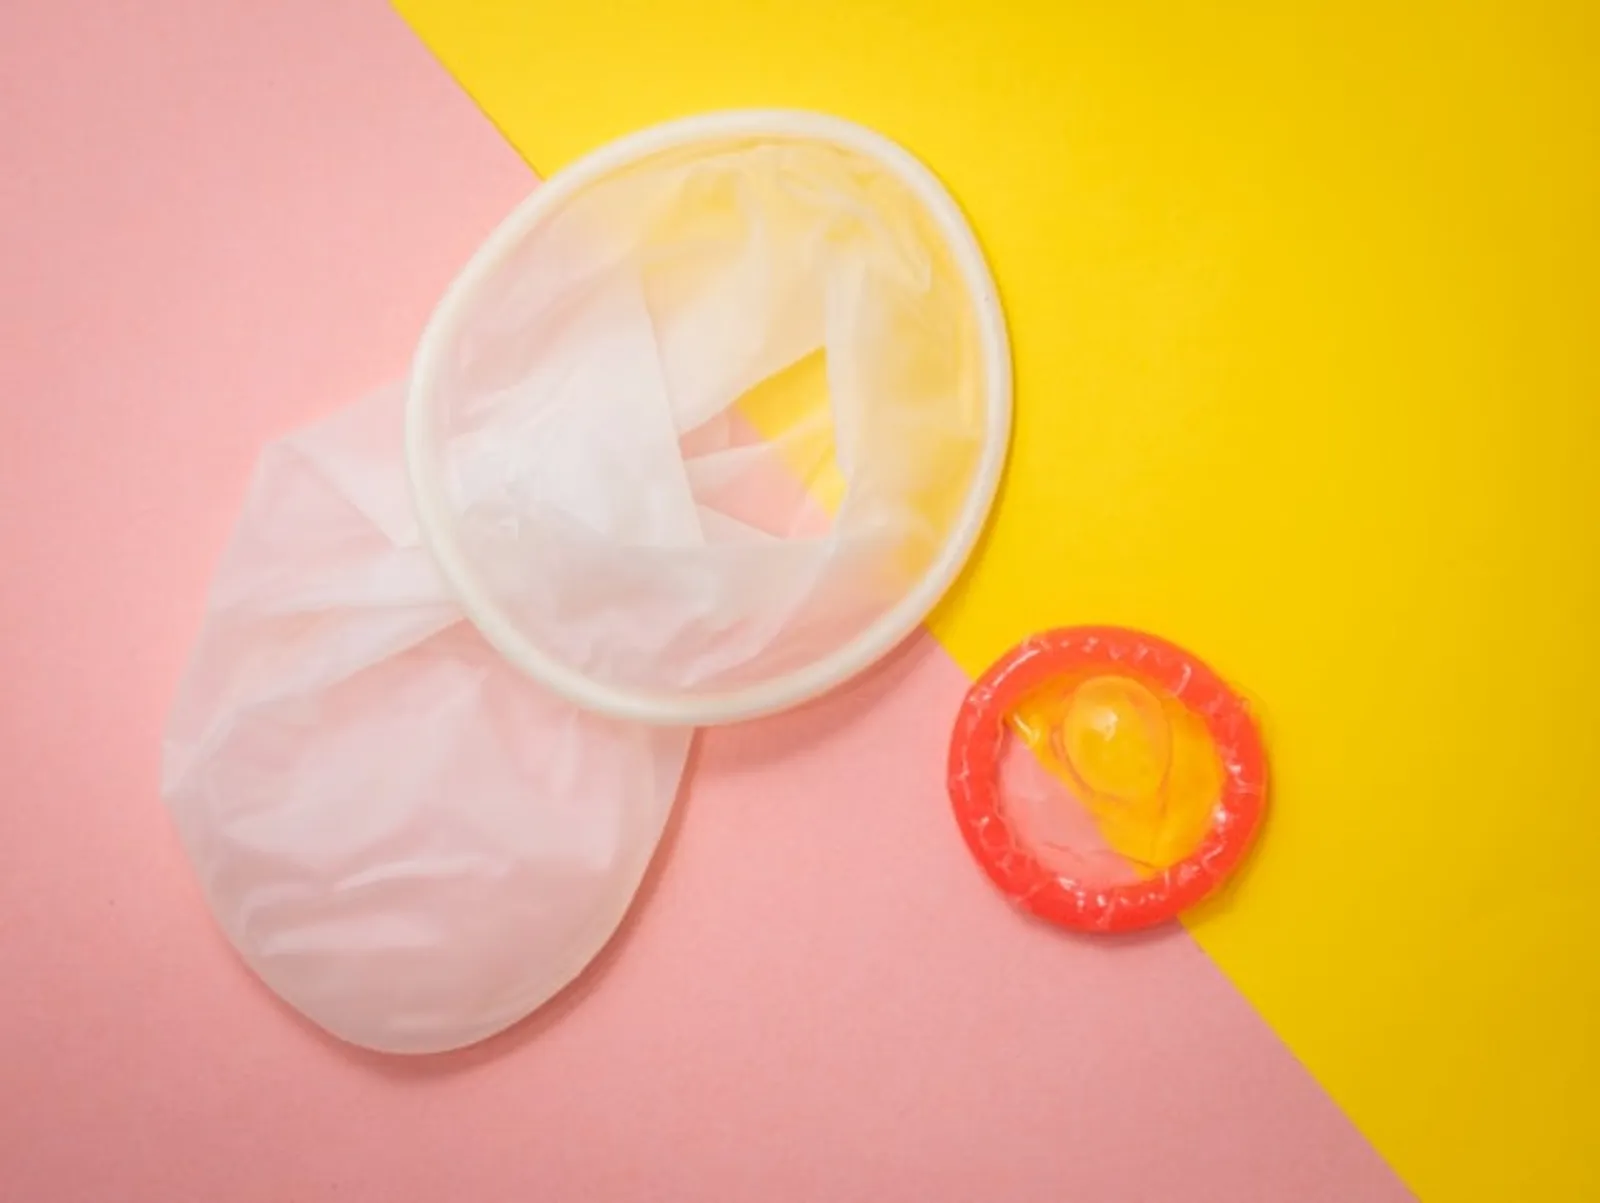 Ini 7 Cara Memakai Kondom yang Benar, Jangan Sampai Salah!